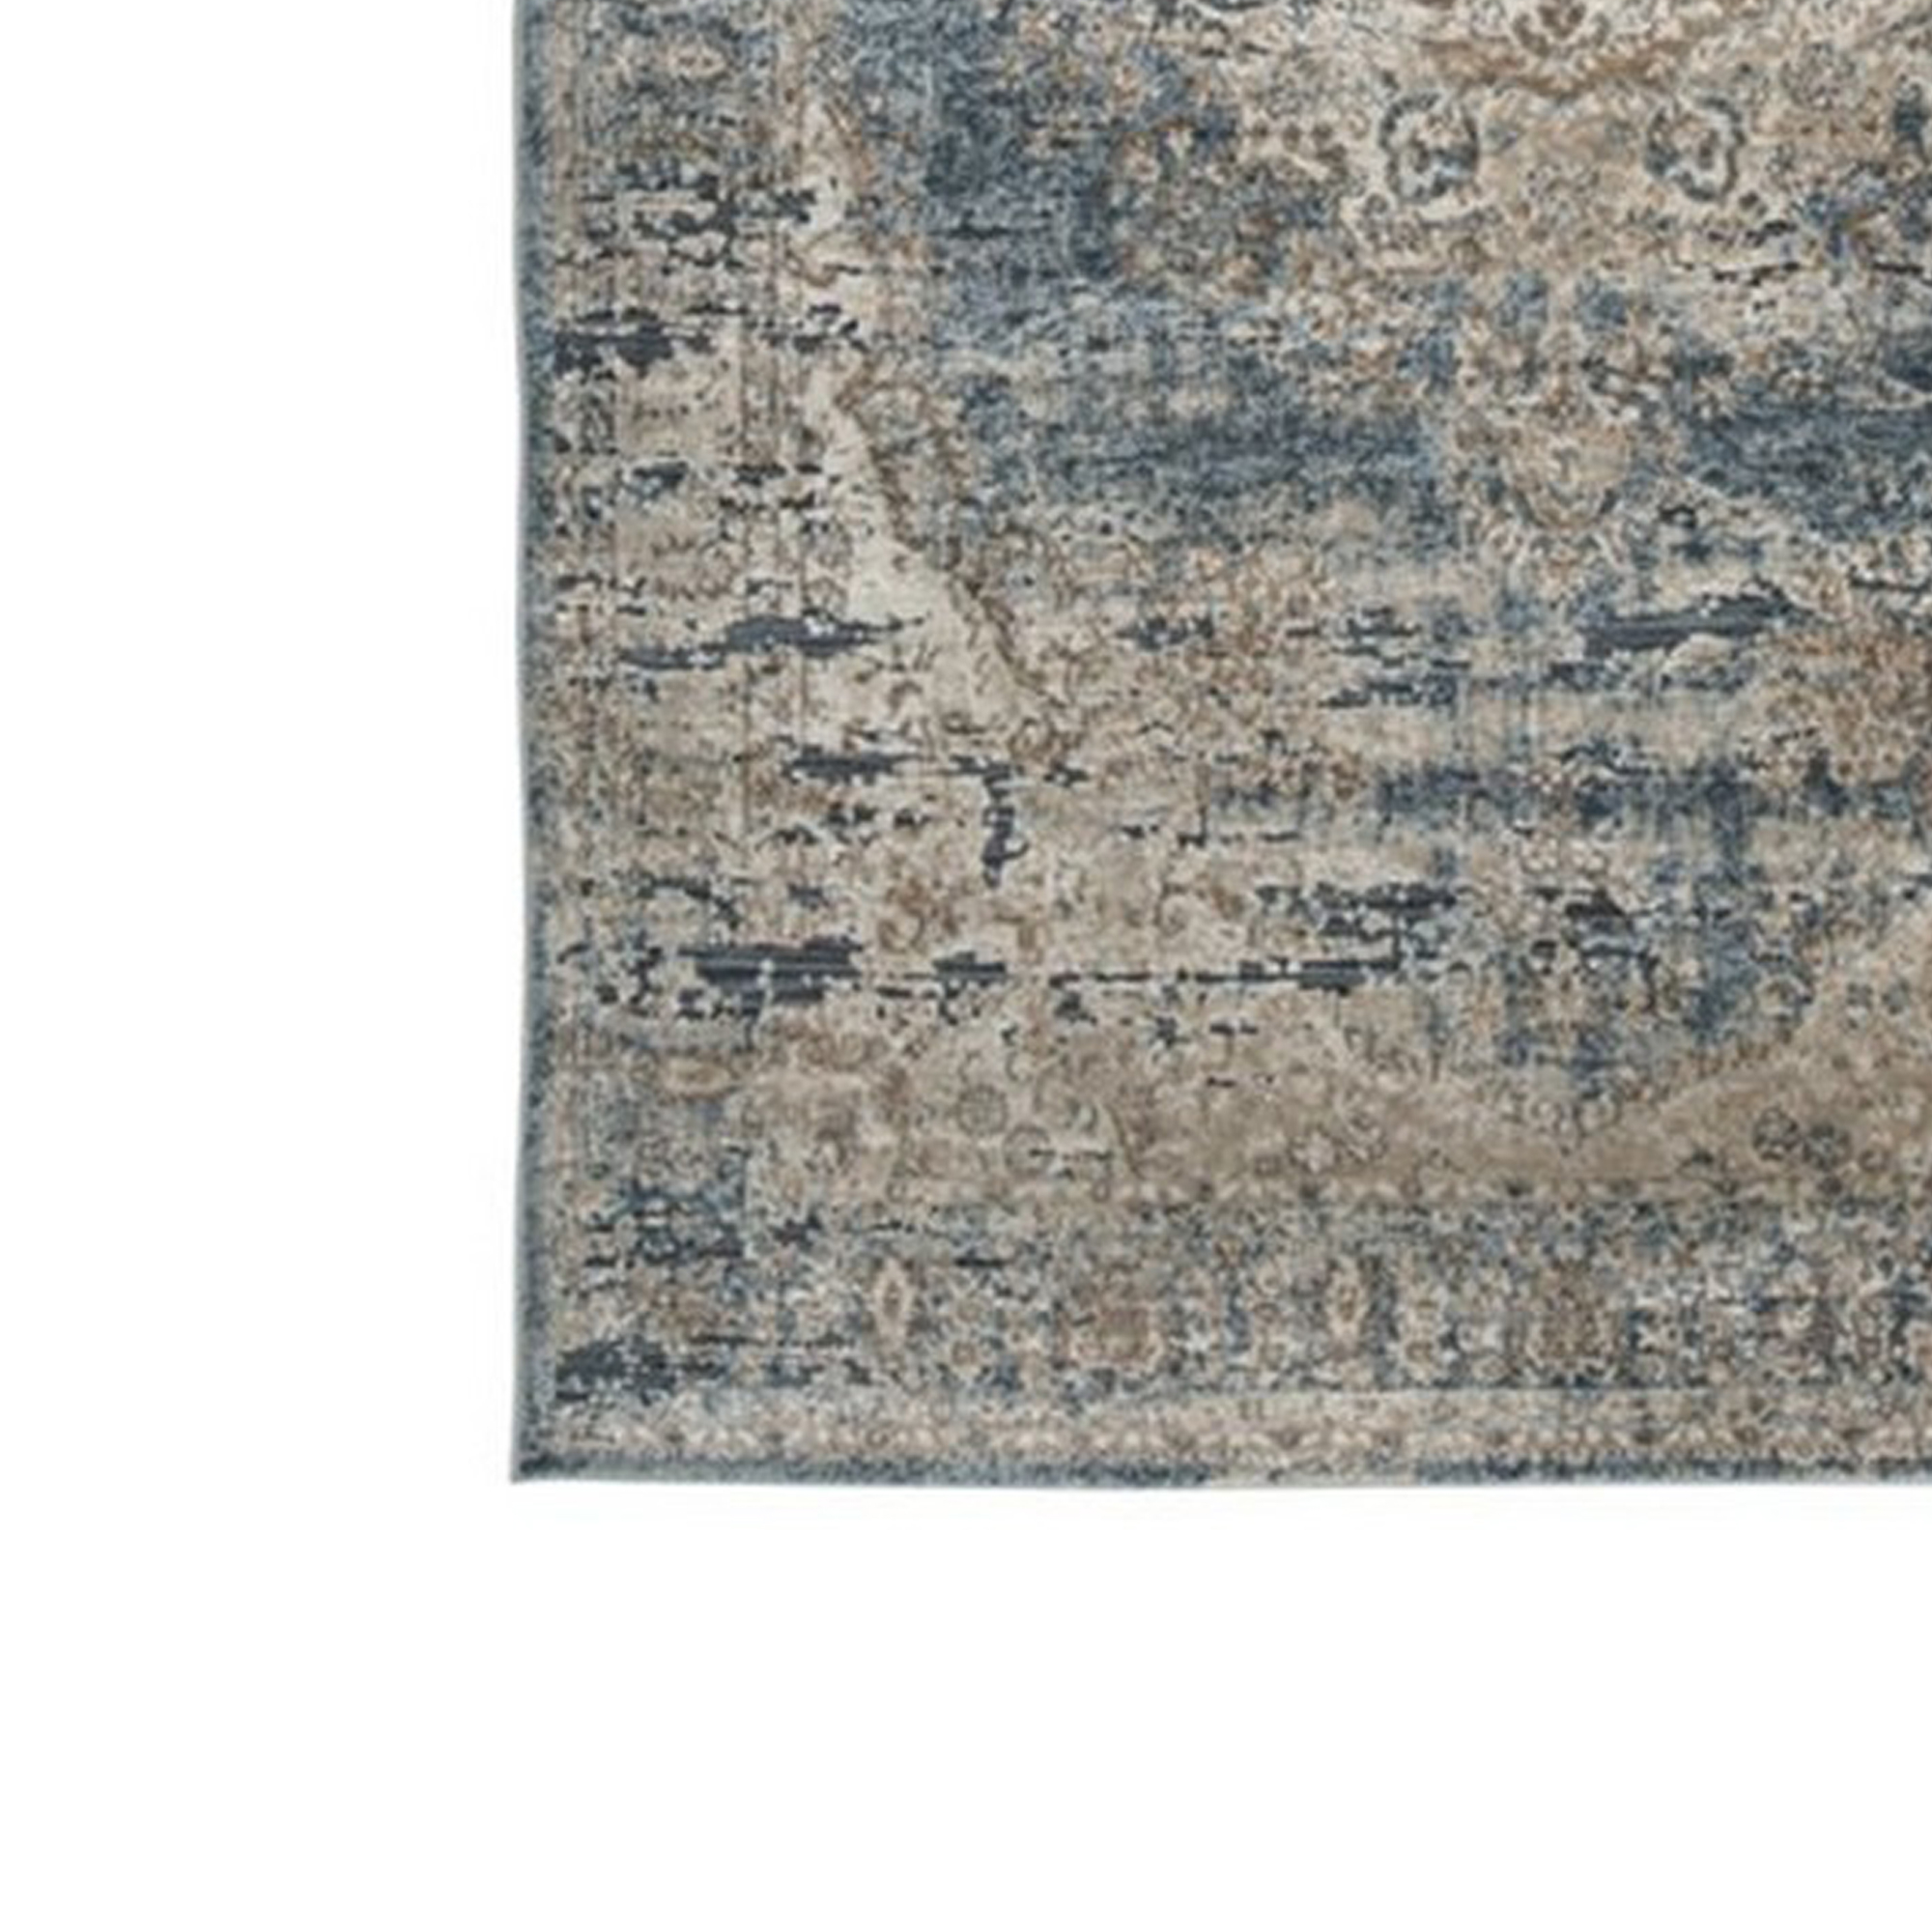 Machine Woven Fabric Rug With Erased Motif Pattern, Medium, Blue And Beige- Saltoro Sherpi